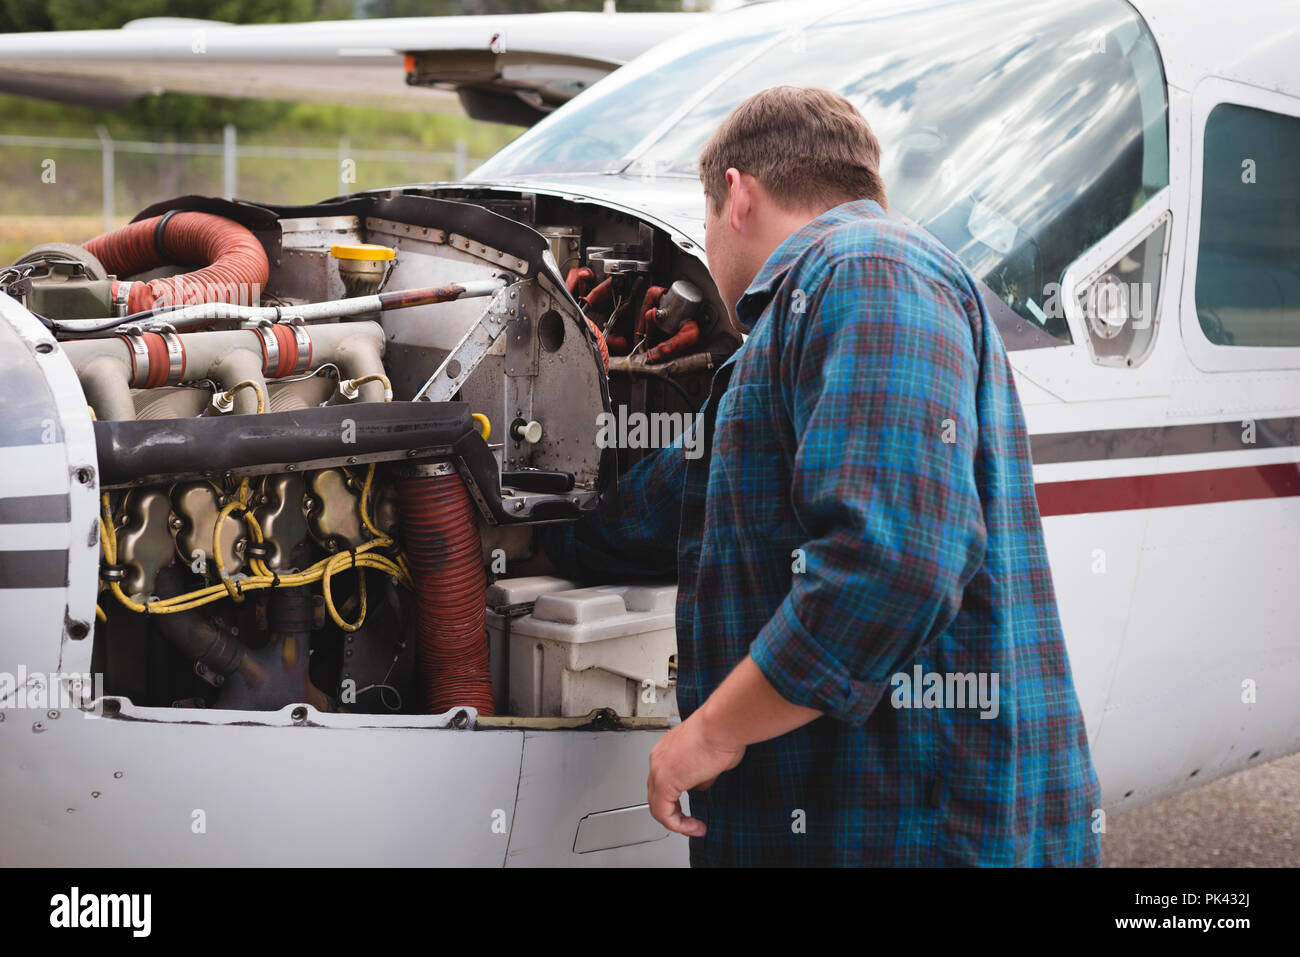 Engineer servicing aircraft engine near hangar Stock Photo